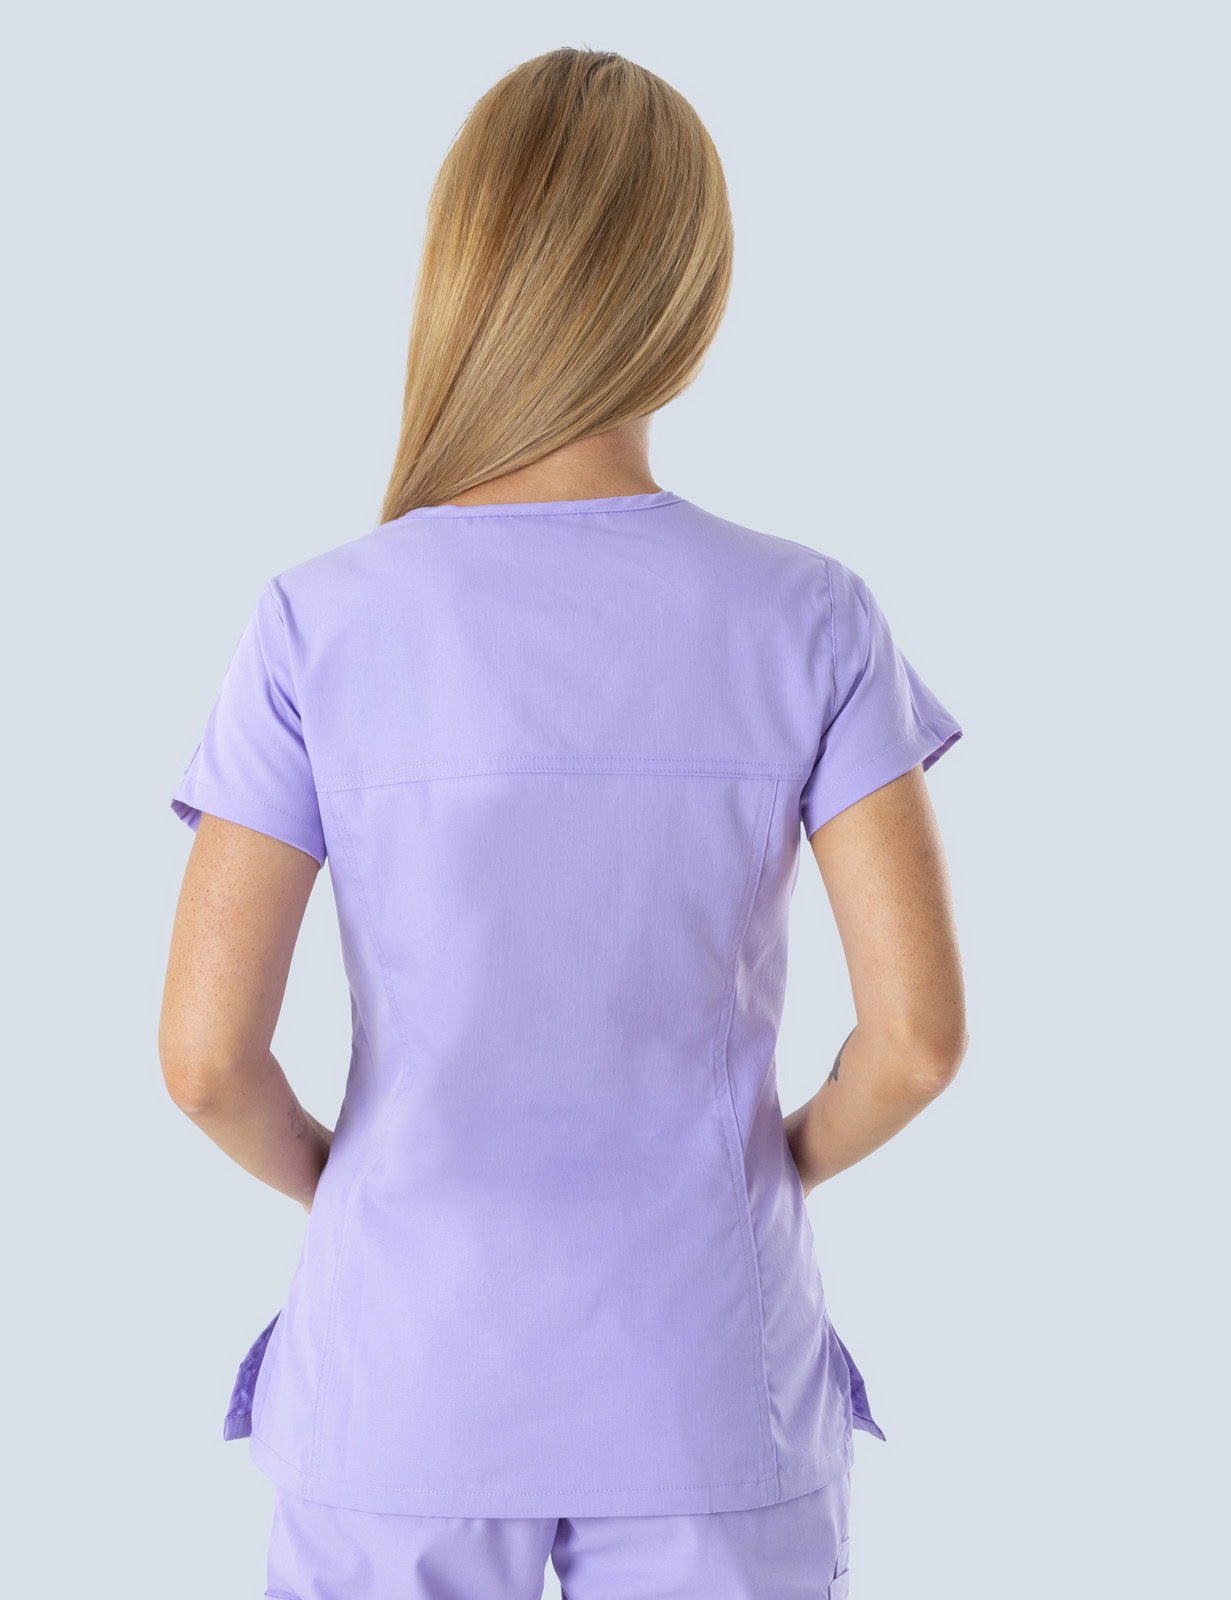 Queensland Children's Hospital Emergency Department Registered  Nurse  Uniform Top Bundle  (Women's Fit Top in Lilac incl Logos)